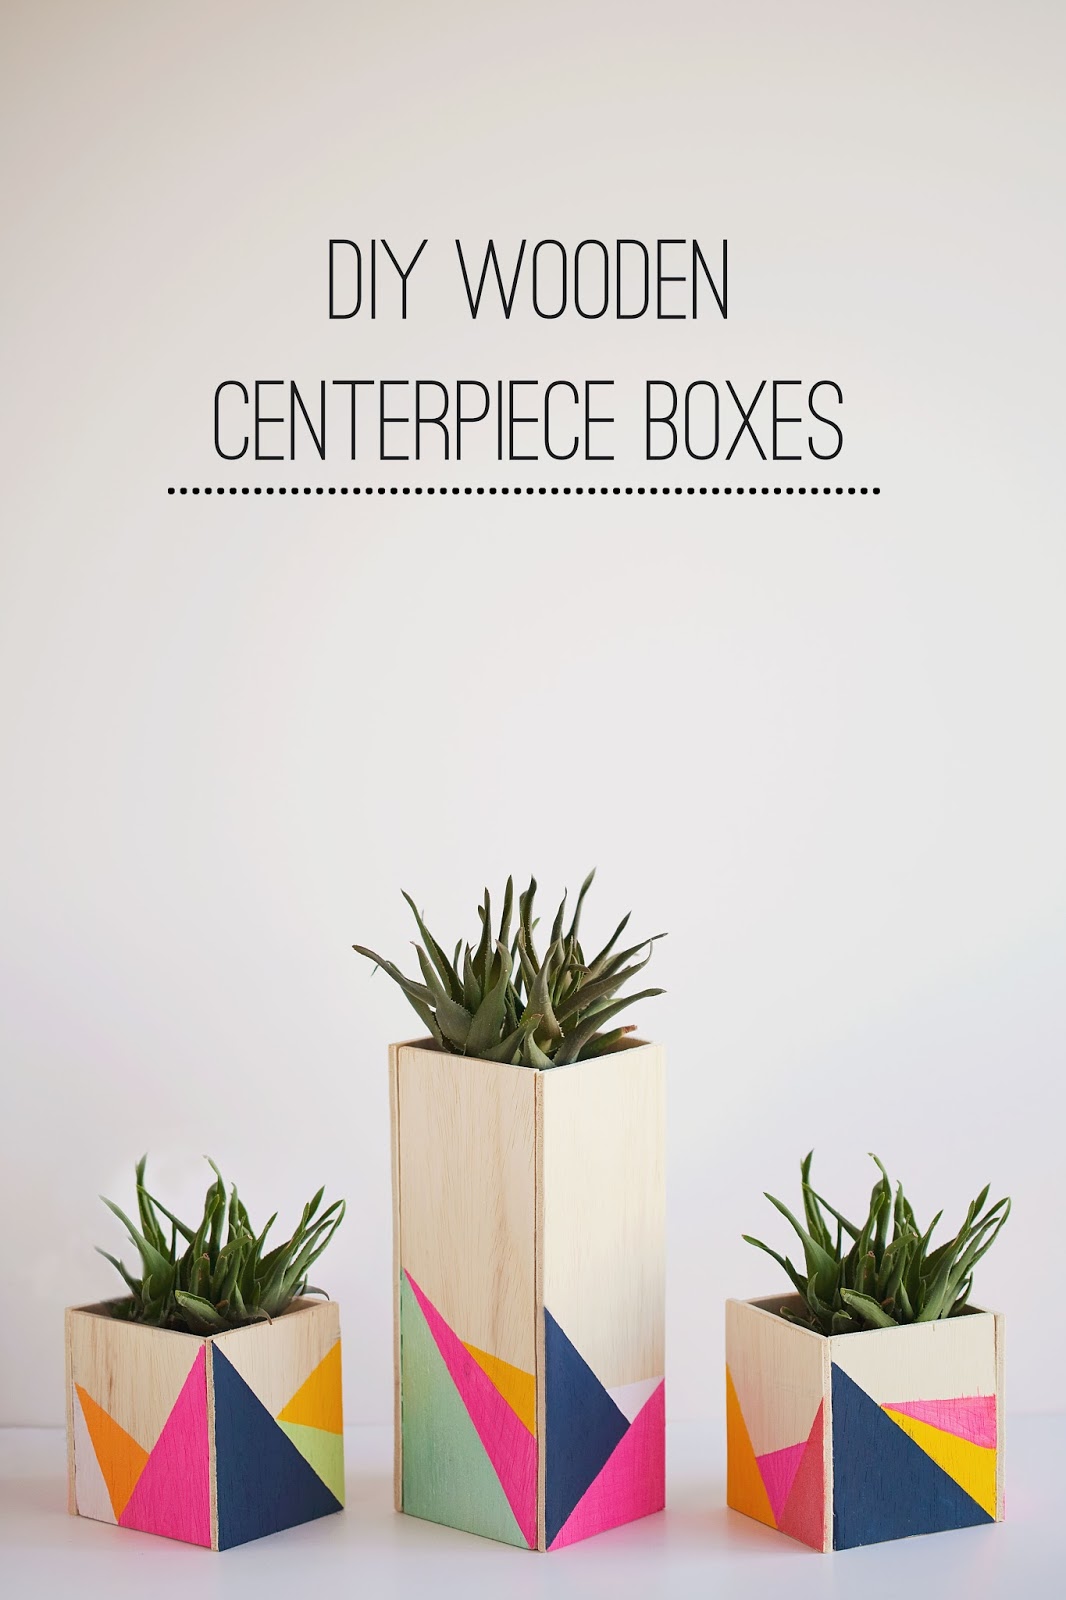 DIY WOODEN CENTERPIECE BOXES